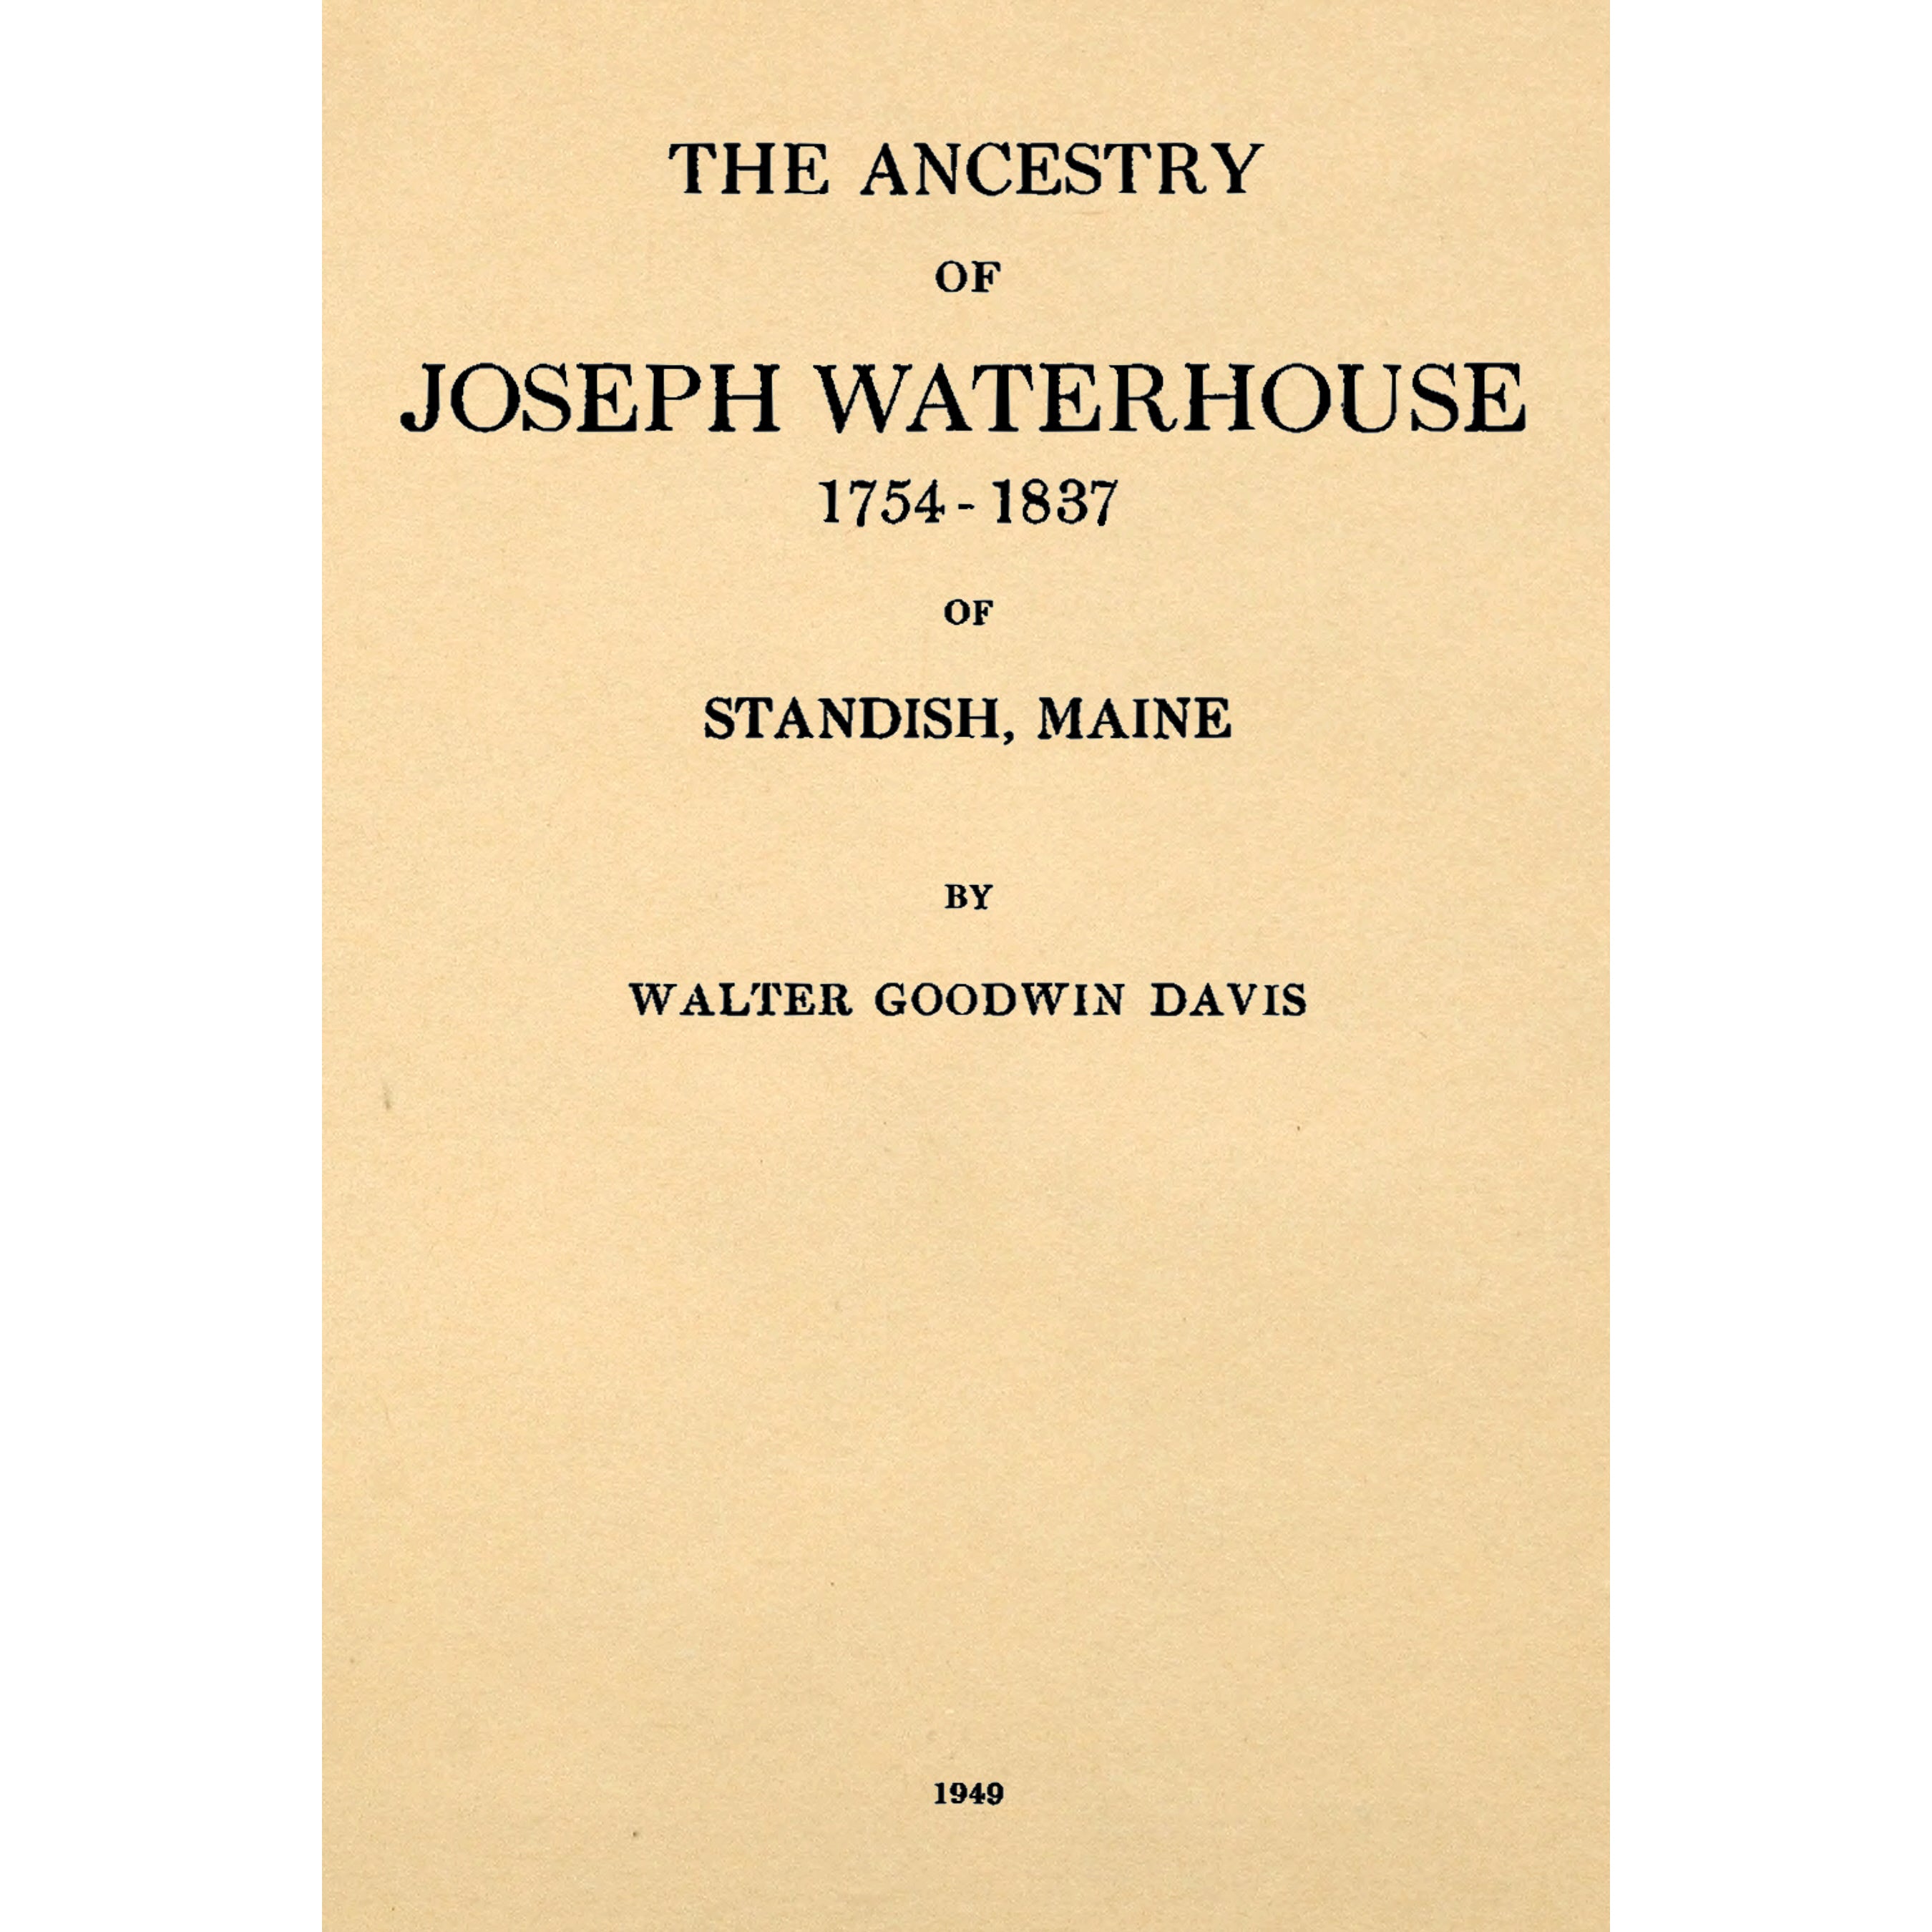 The ancestry of Joseph Waterhouse, 1754-1837, of Standish, Maine